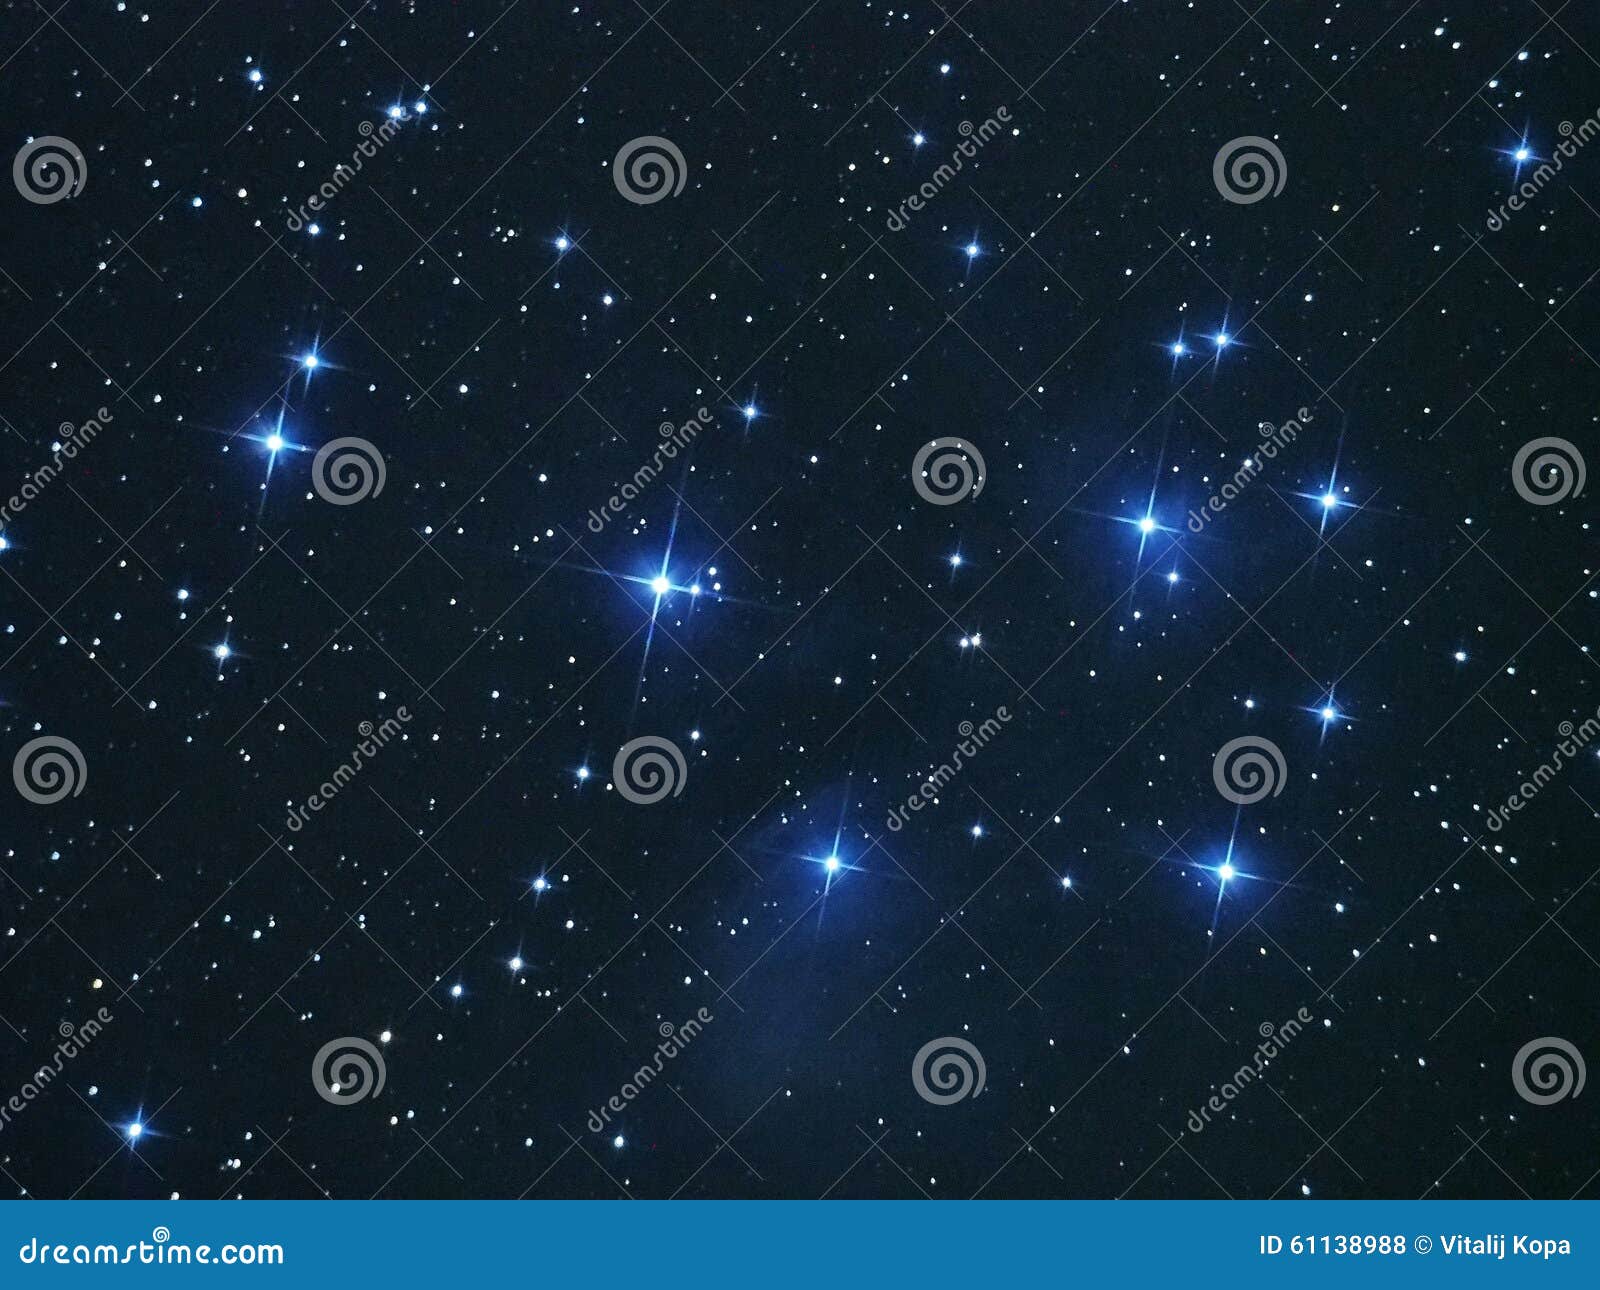 night sky stars, pleiades open cluster m45 in taurus constellation